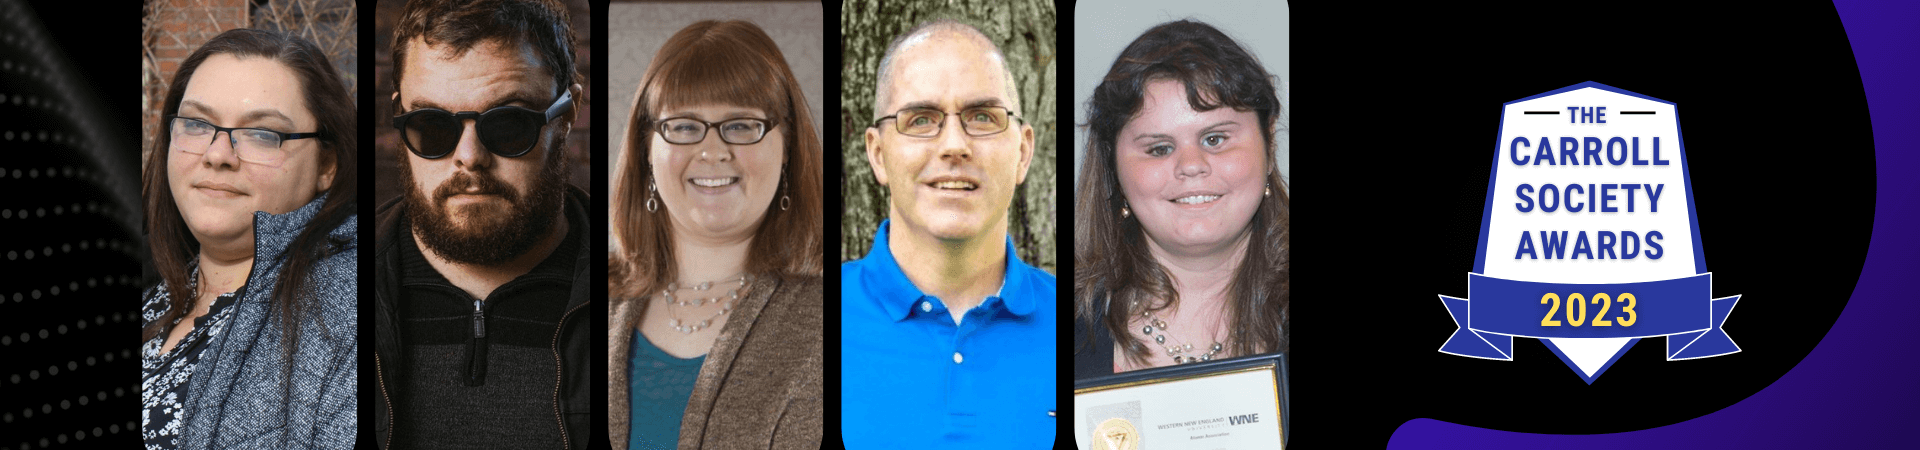 Headshots of the five winners of the 2023 Carroll Society Awards.